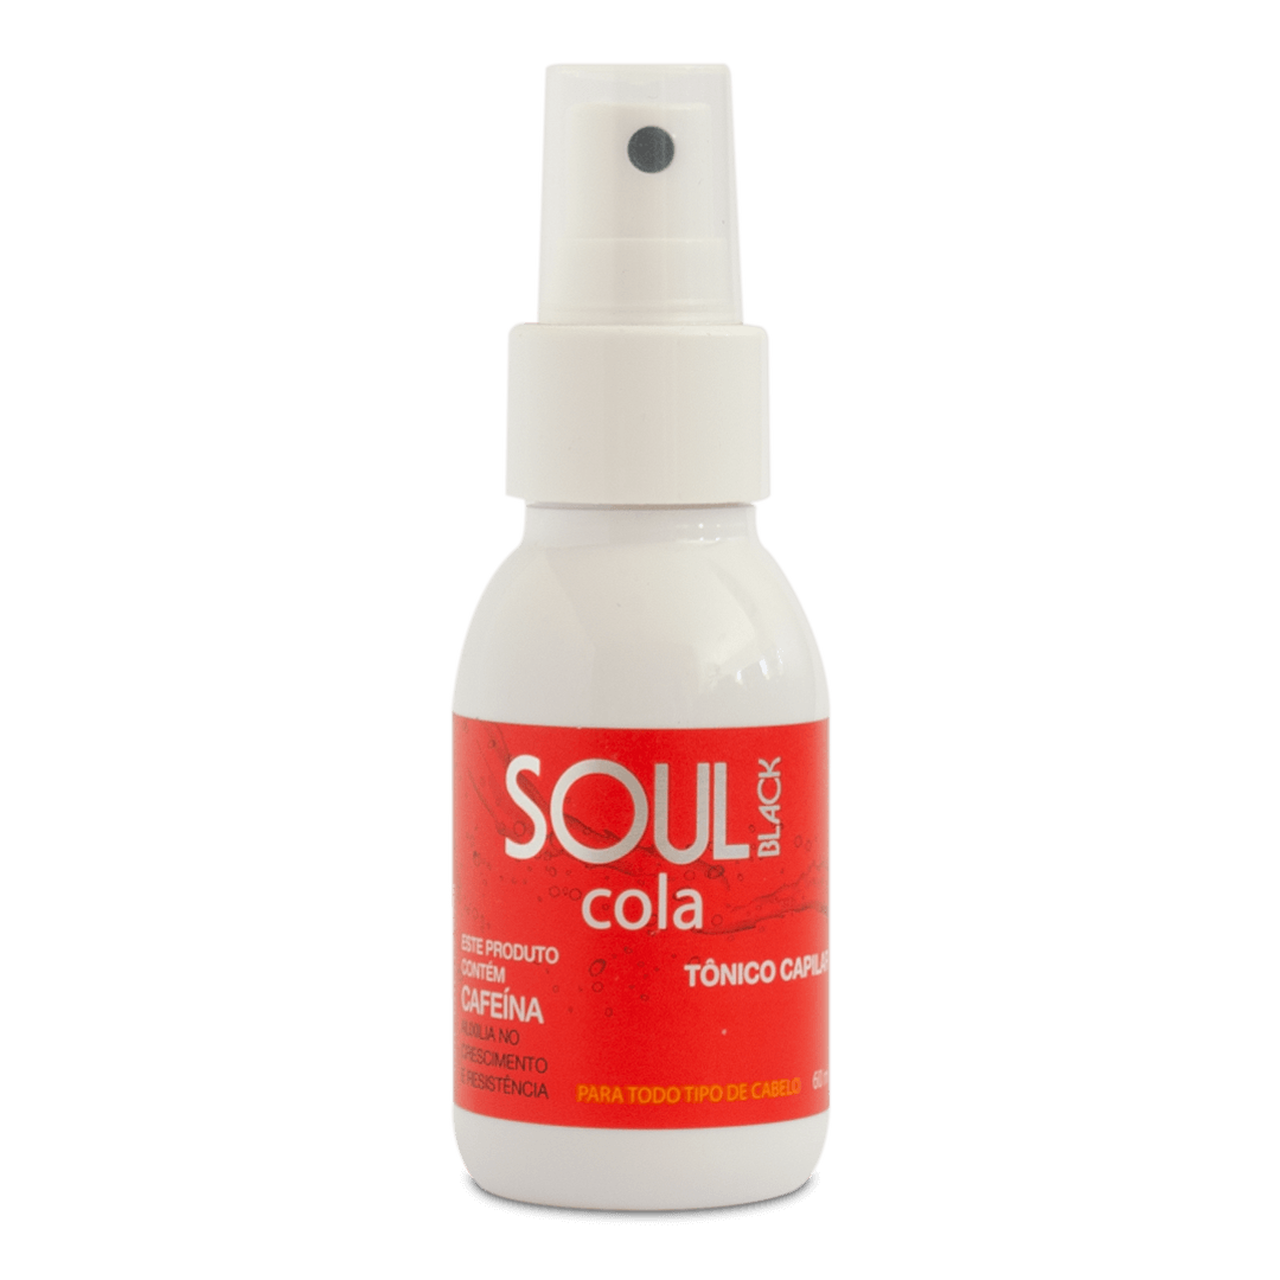 ASP Hair Care Soul Black Cola Hair Tonic 60ML - ASP